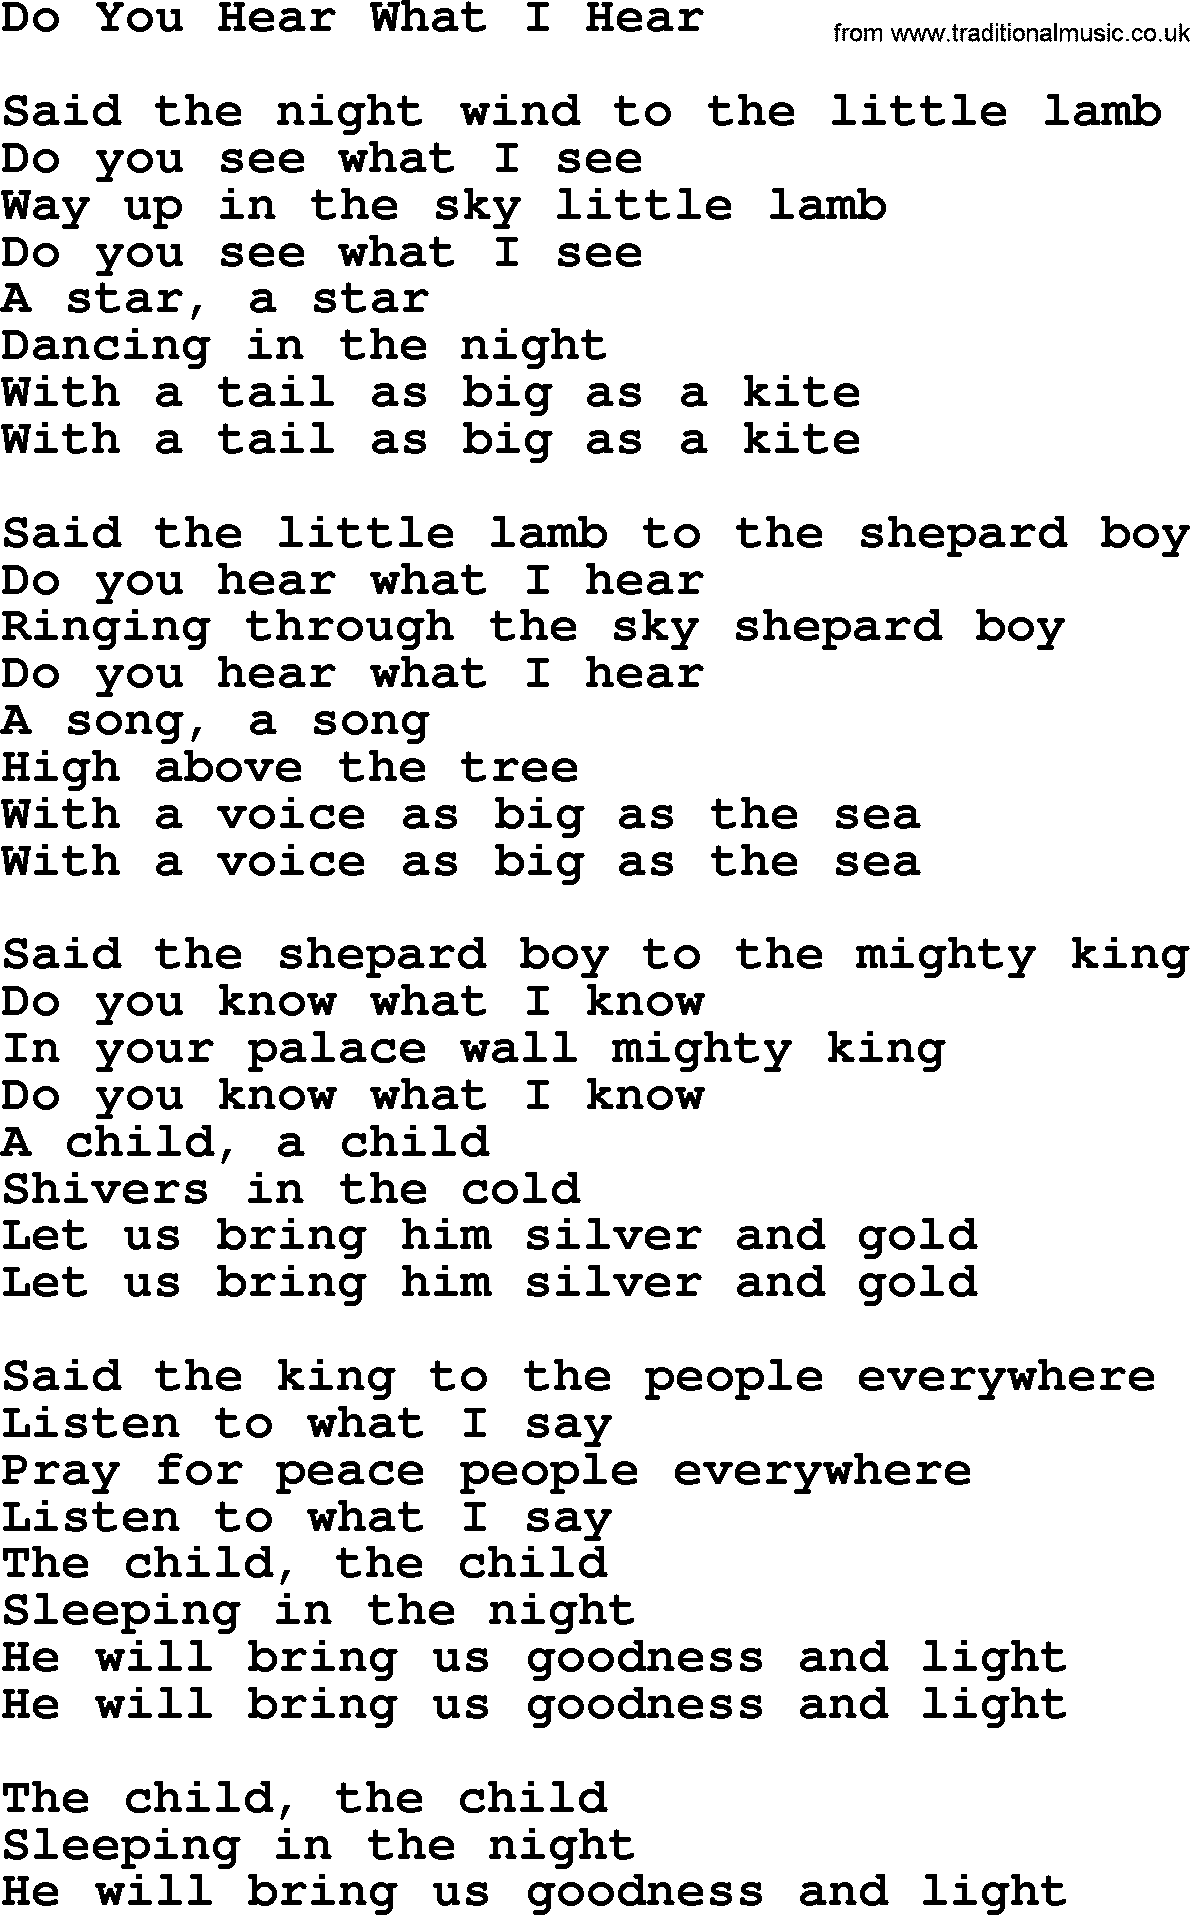 The Byrds song Do You Hear What I Hear, lyrics